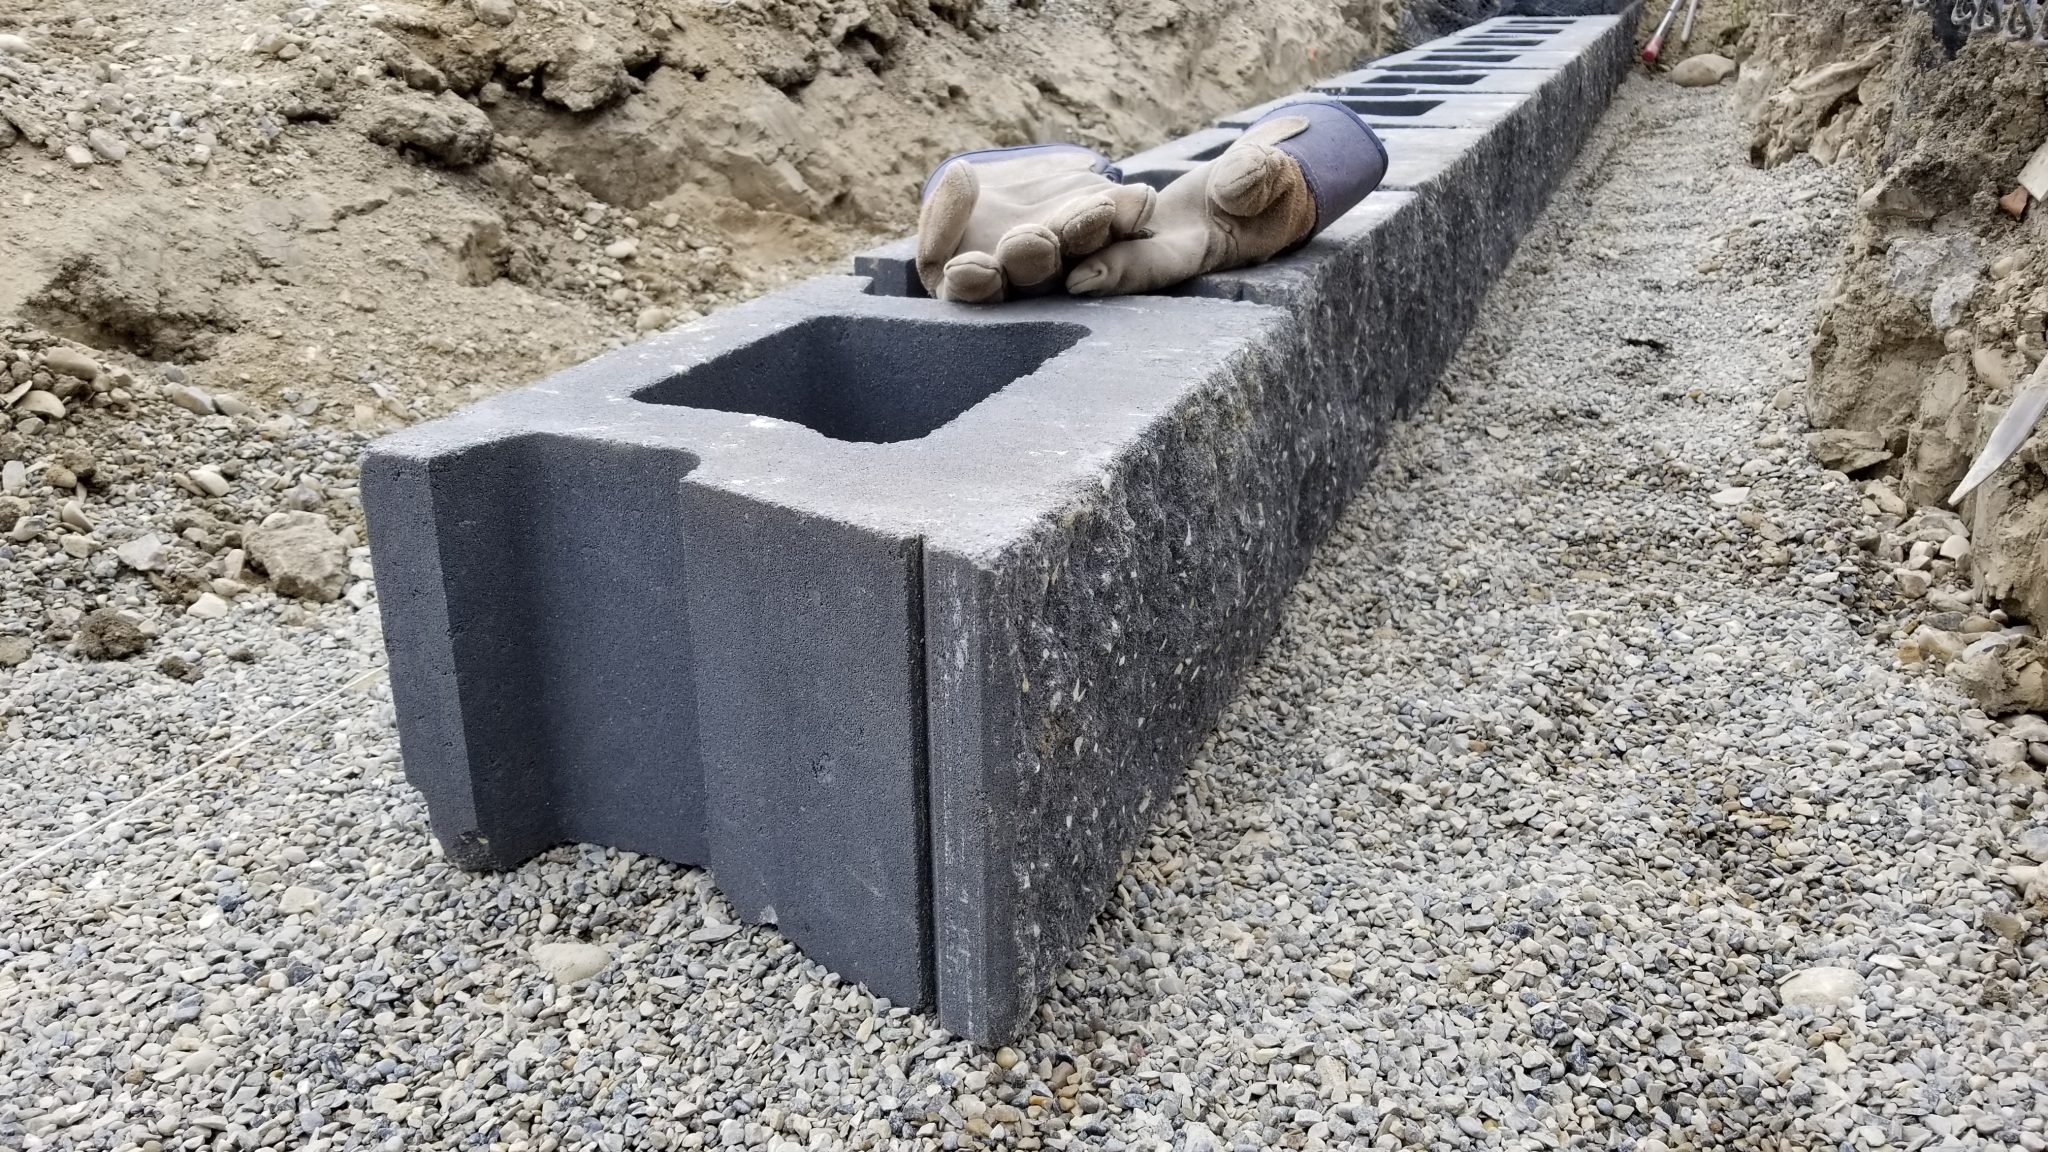 CornerStone 100 retaining wall system block